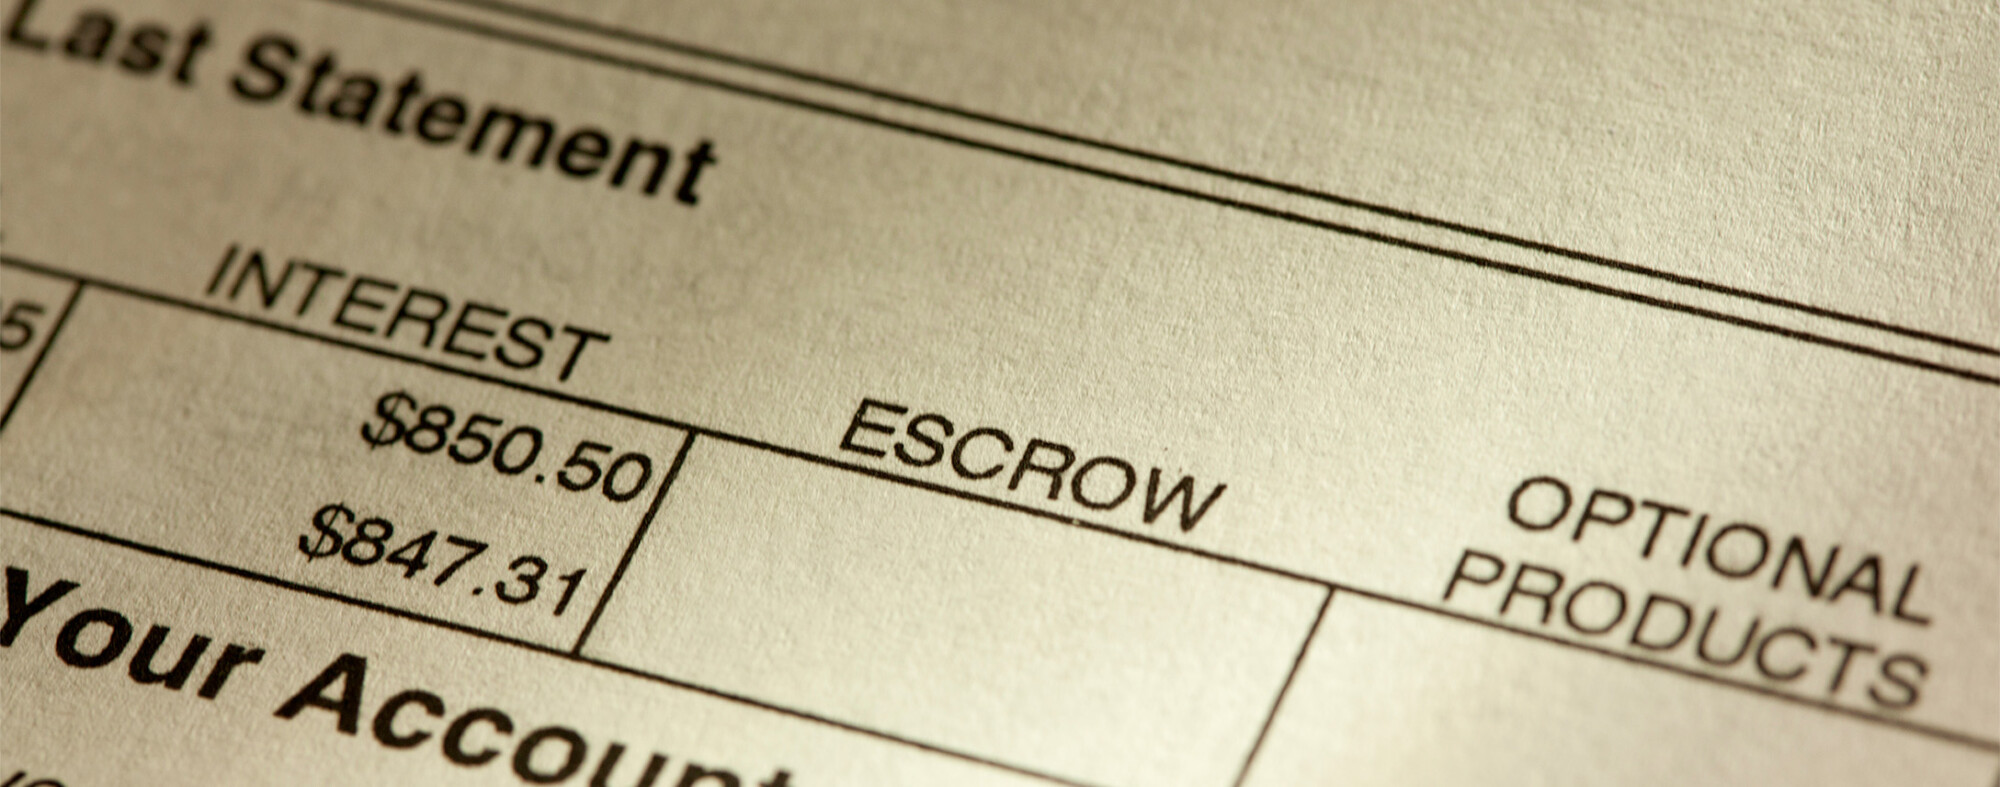 escrow account statement